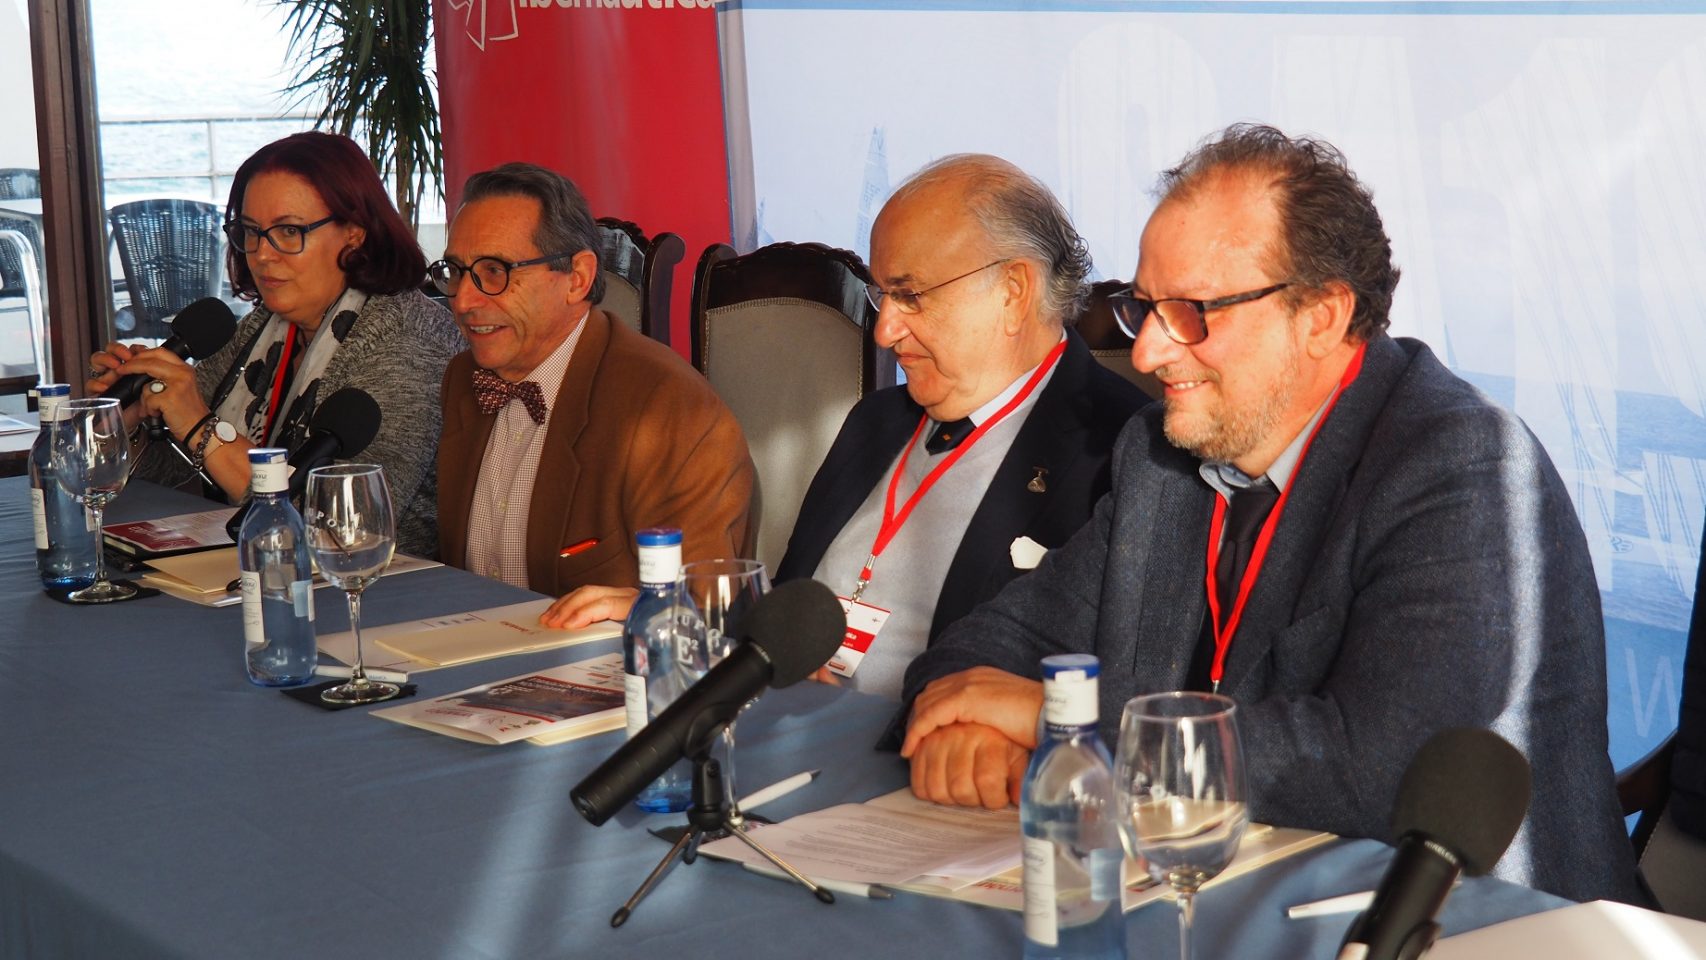 Zulema Prado, Javier Pamies, Francisco G. Bobabilla y Daniel Rey